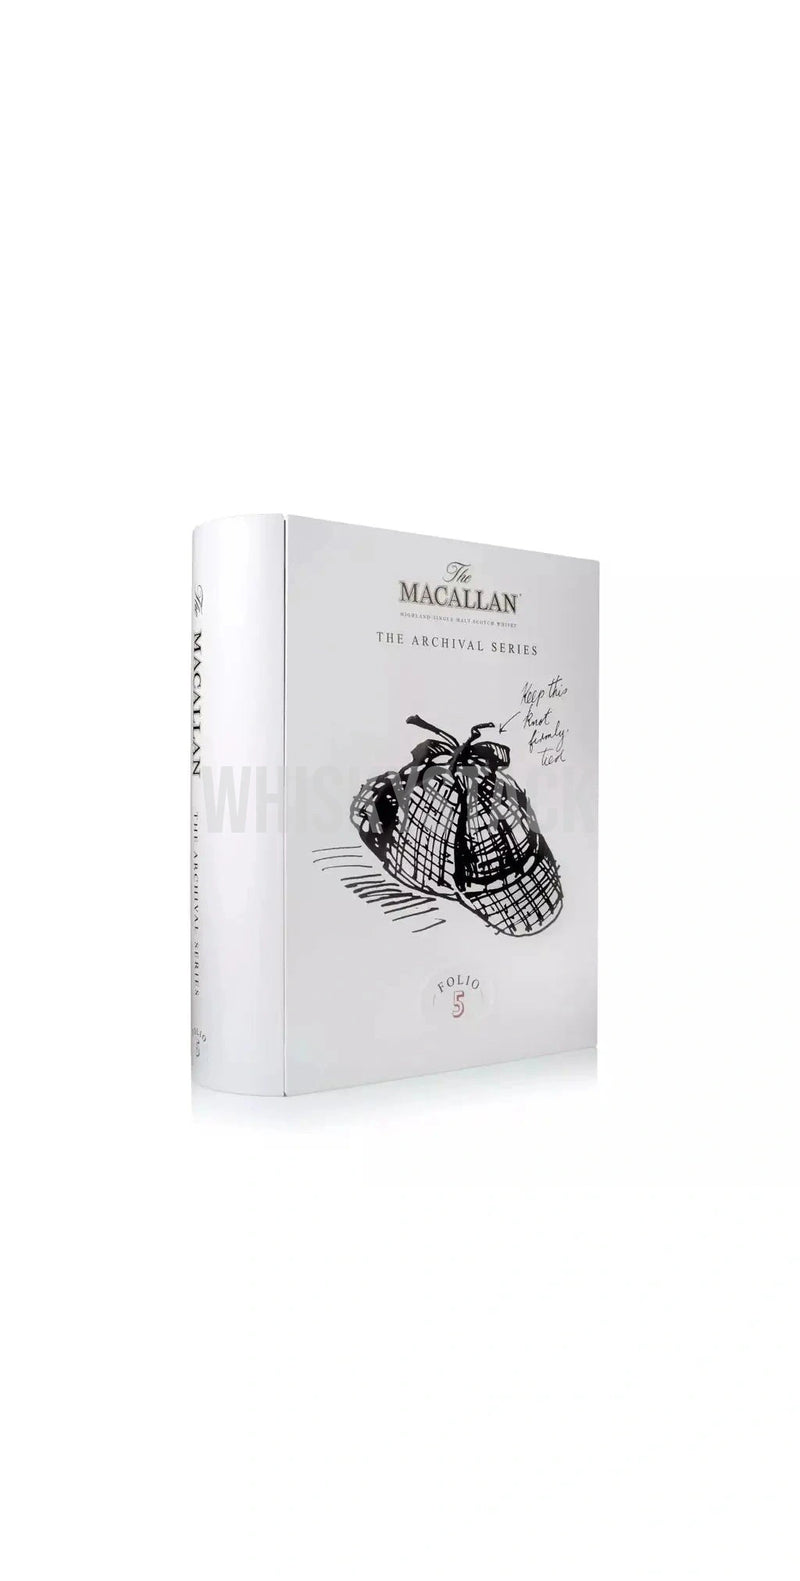 Macallan The Archival Series Folio 5